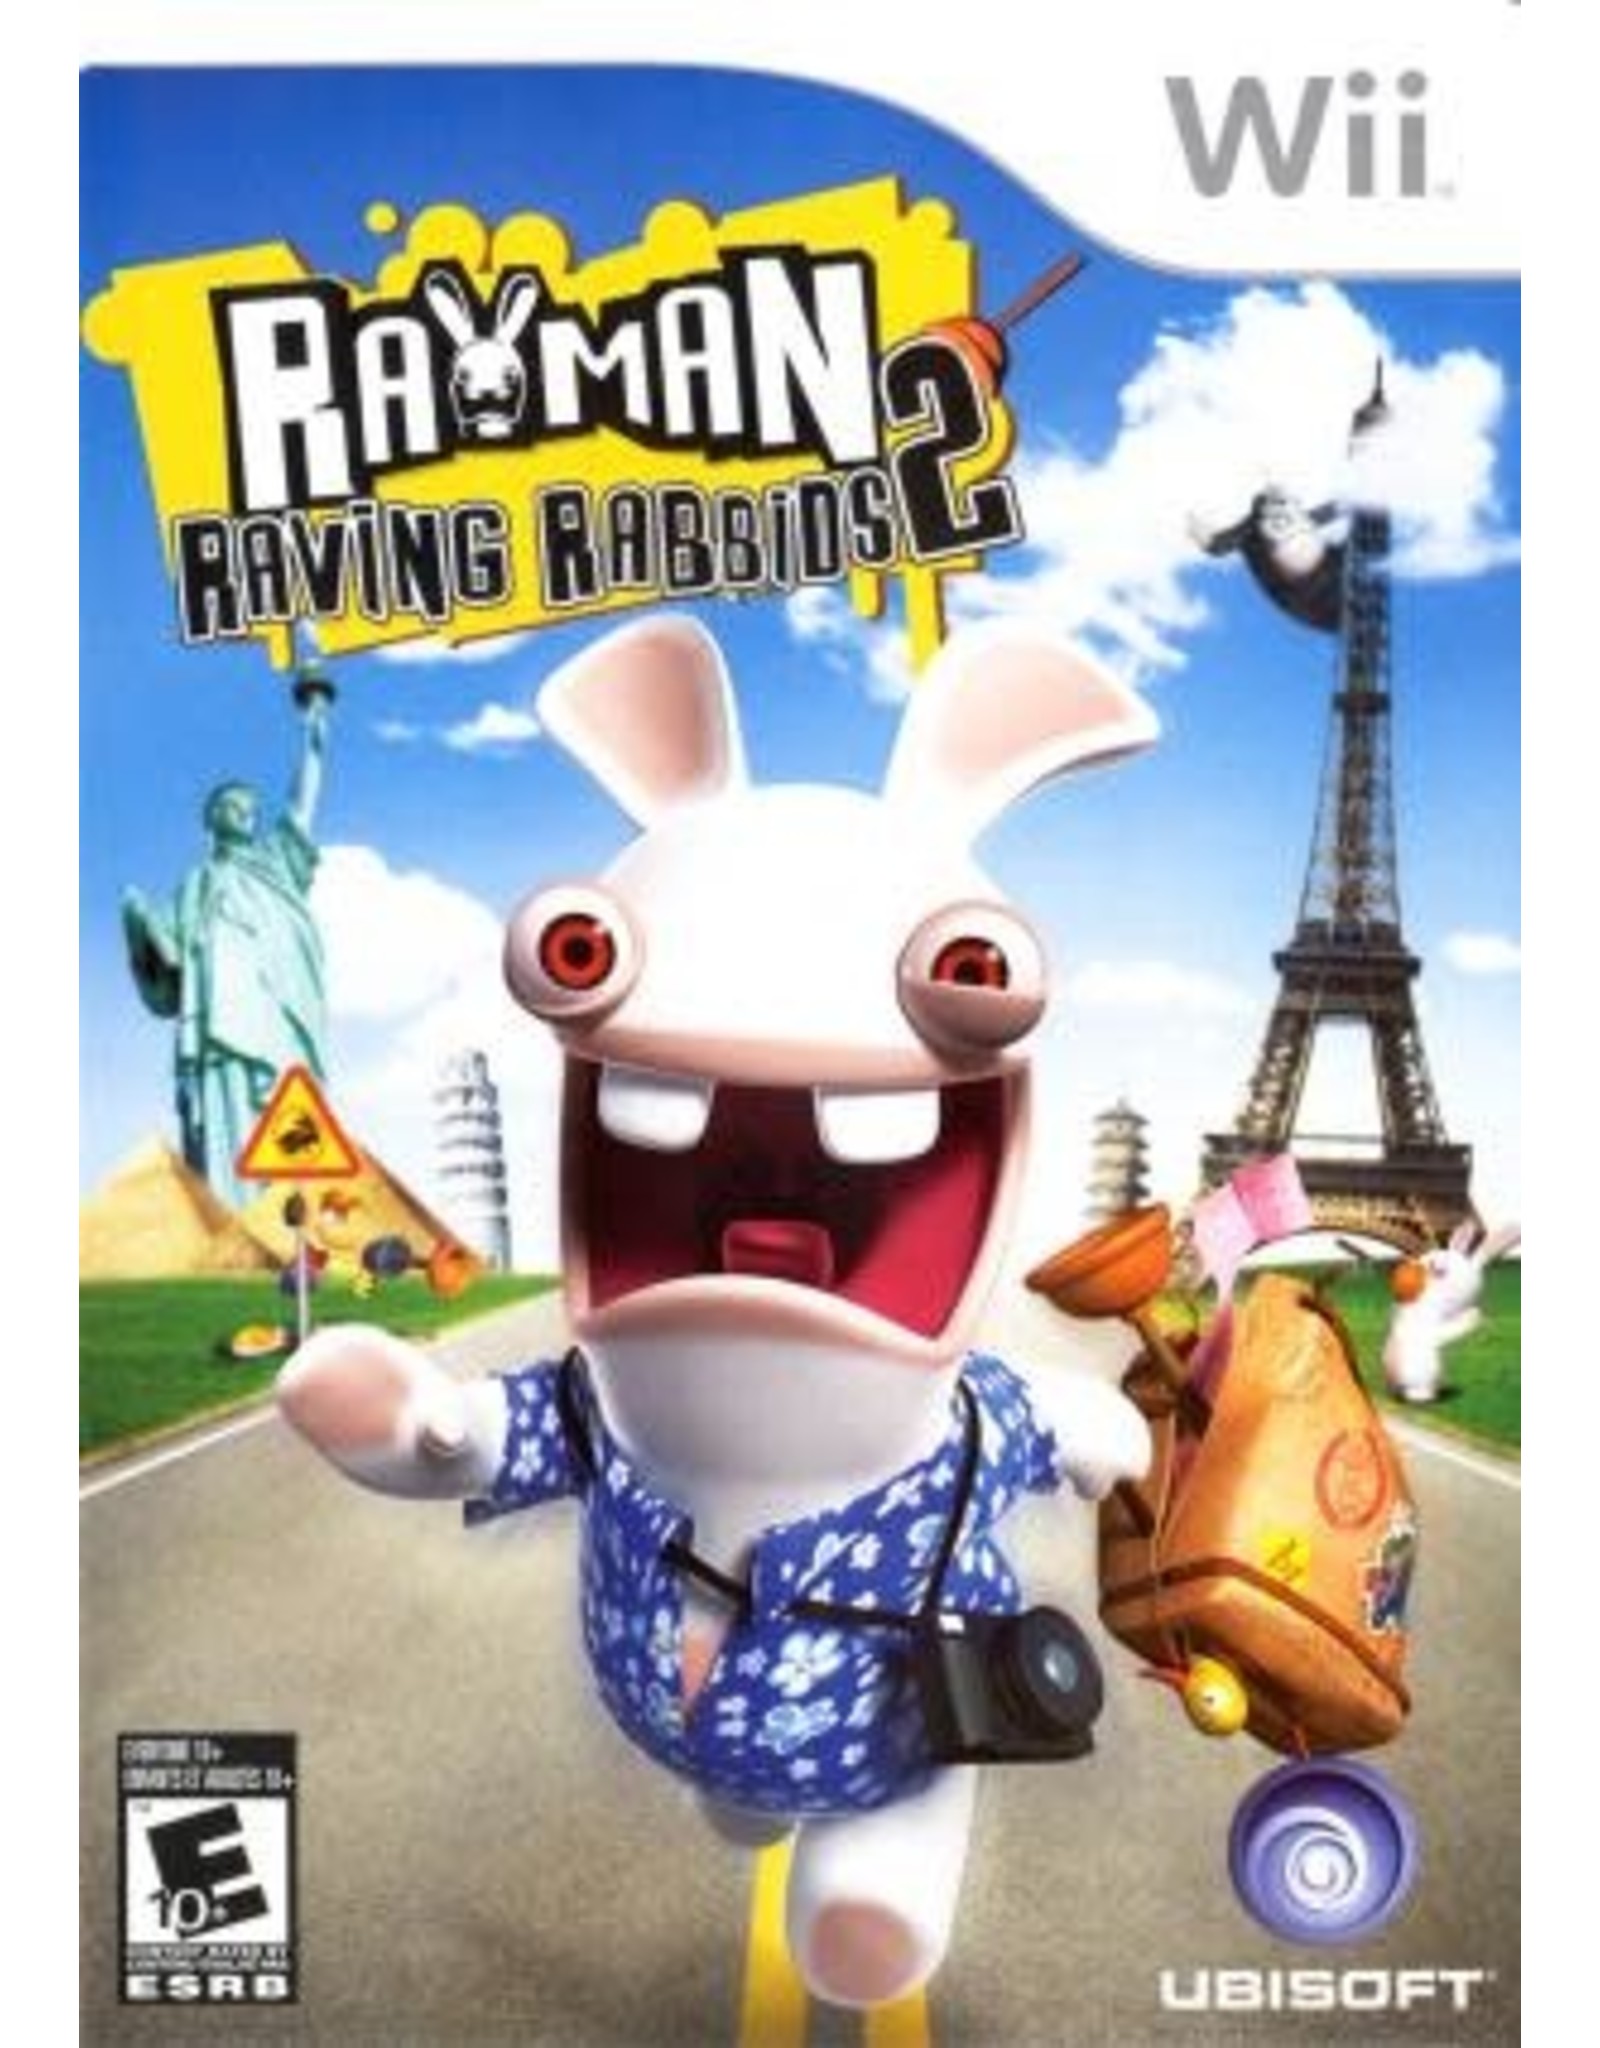 Wii Rayman Raving Rabbids 2 (CiB)